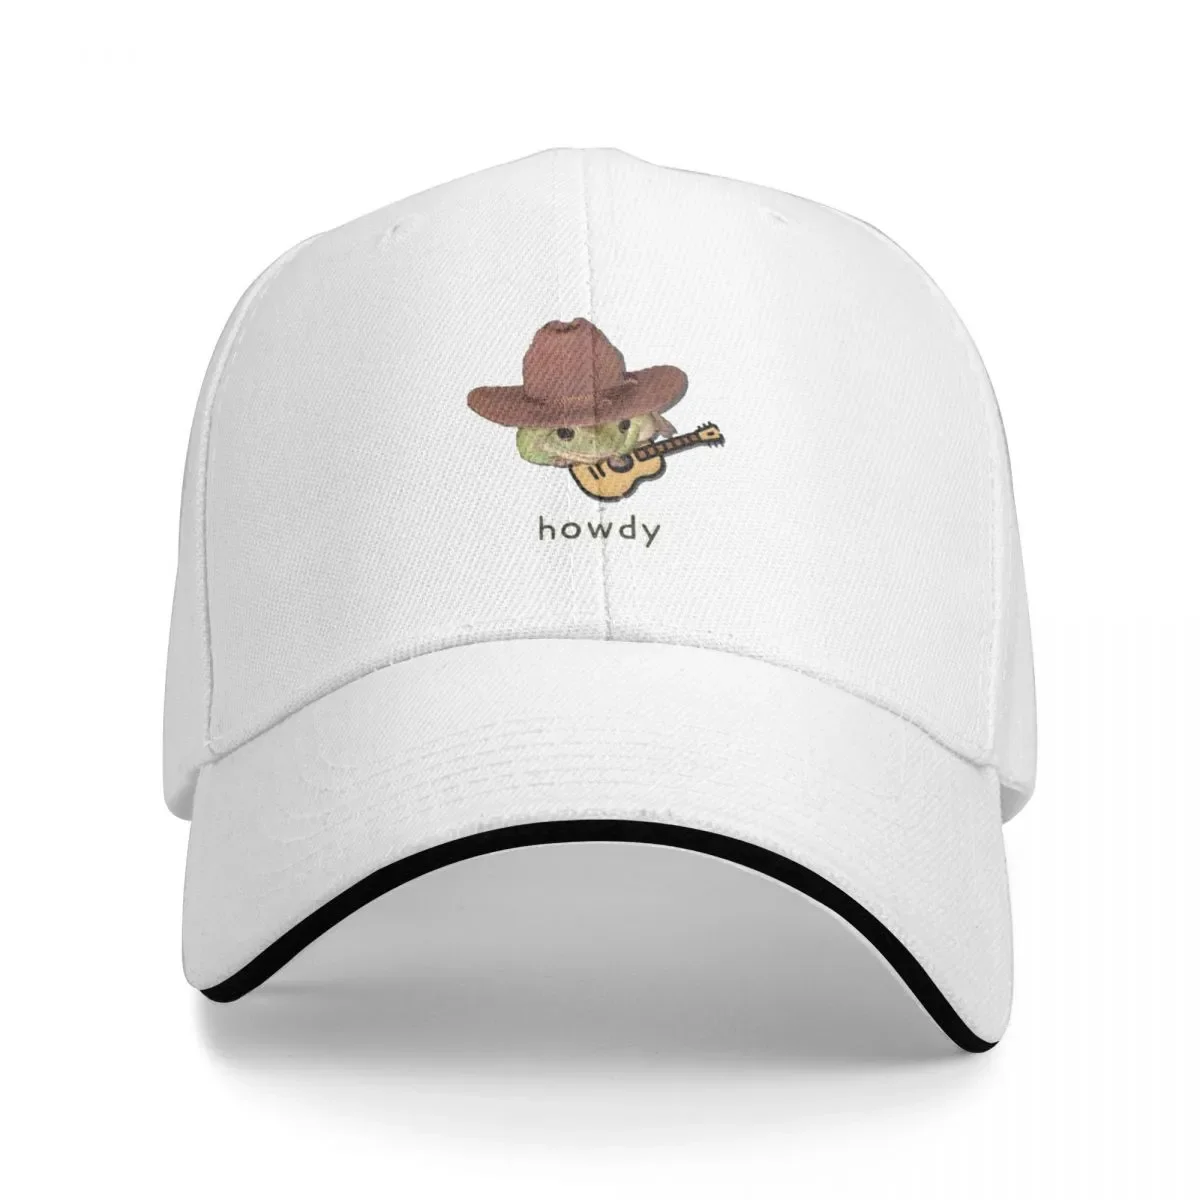 

New Cowboy Frog Cap Baseball Cap baseball caps Big size hat horse hat trucker hats for men Women's